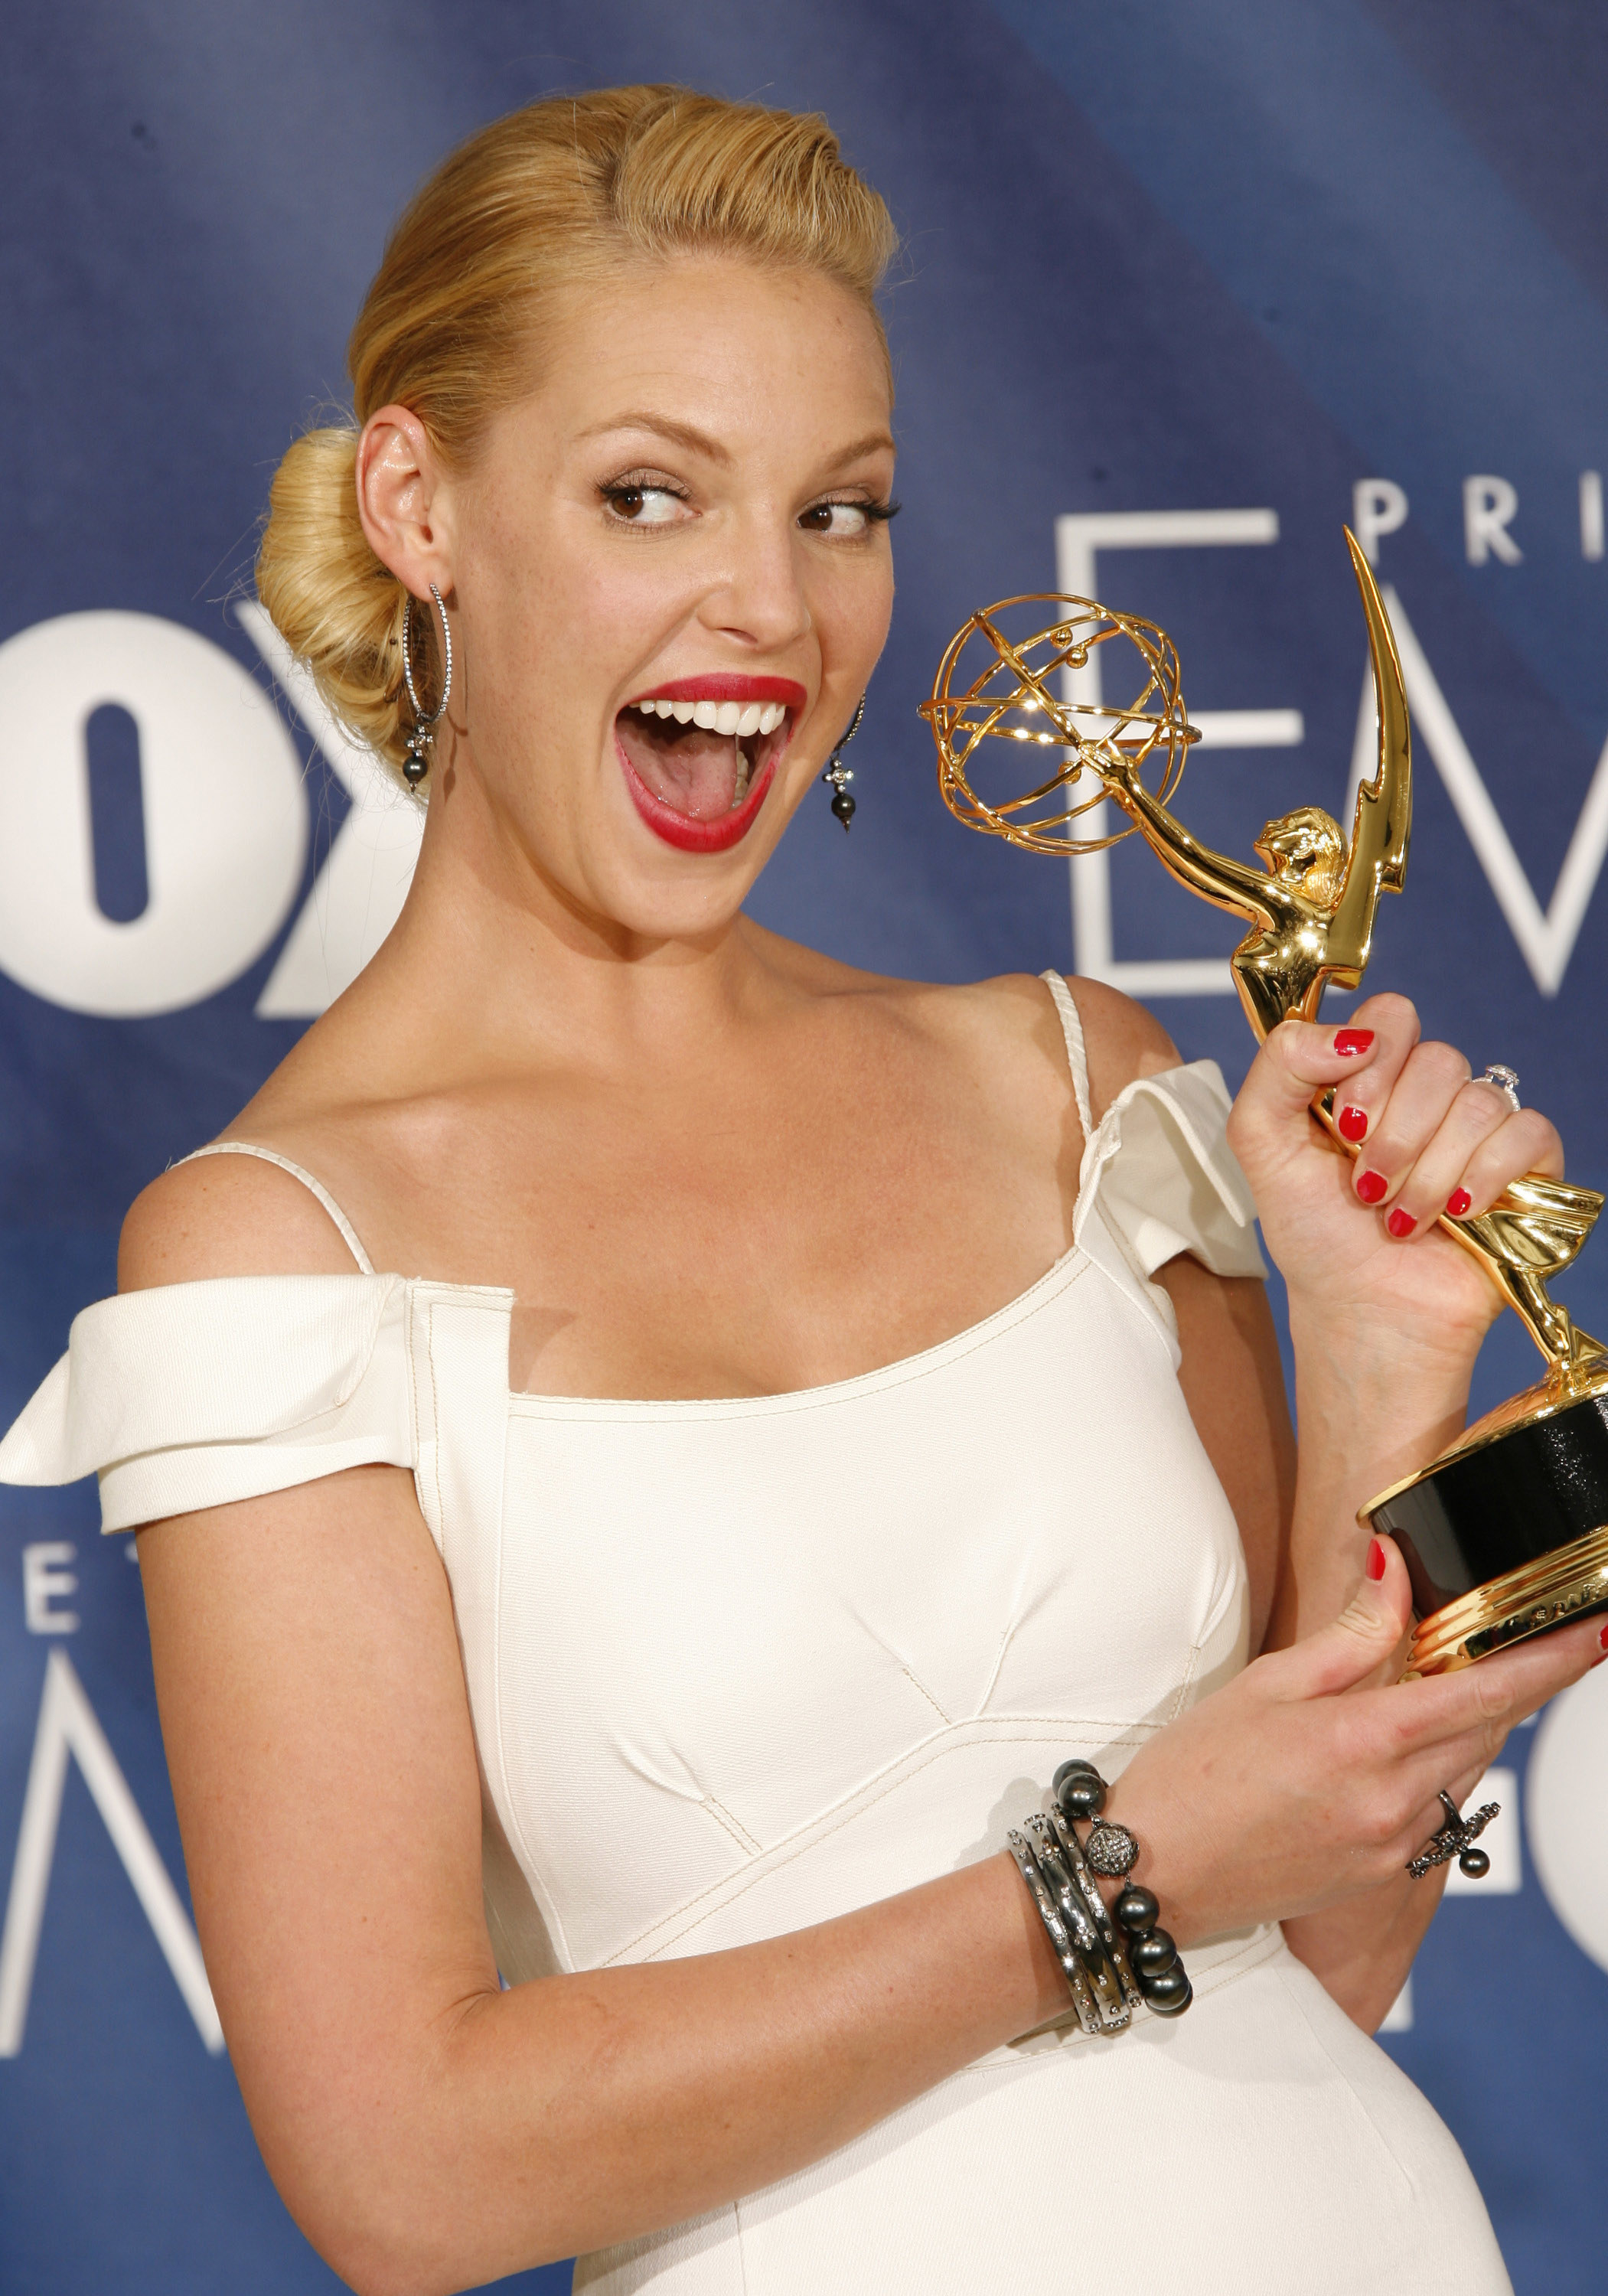 Katherine Heigl holding an Emmy